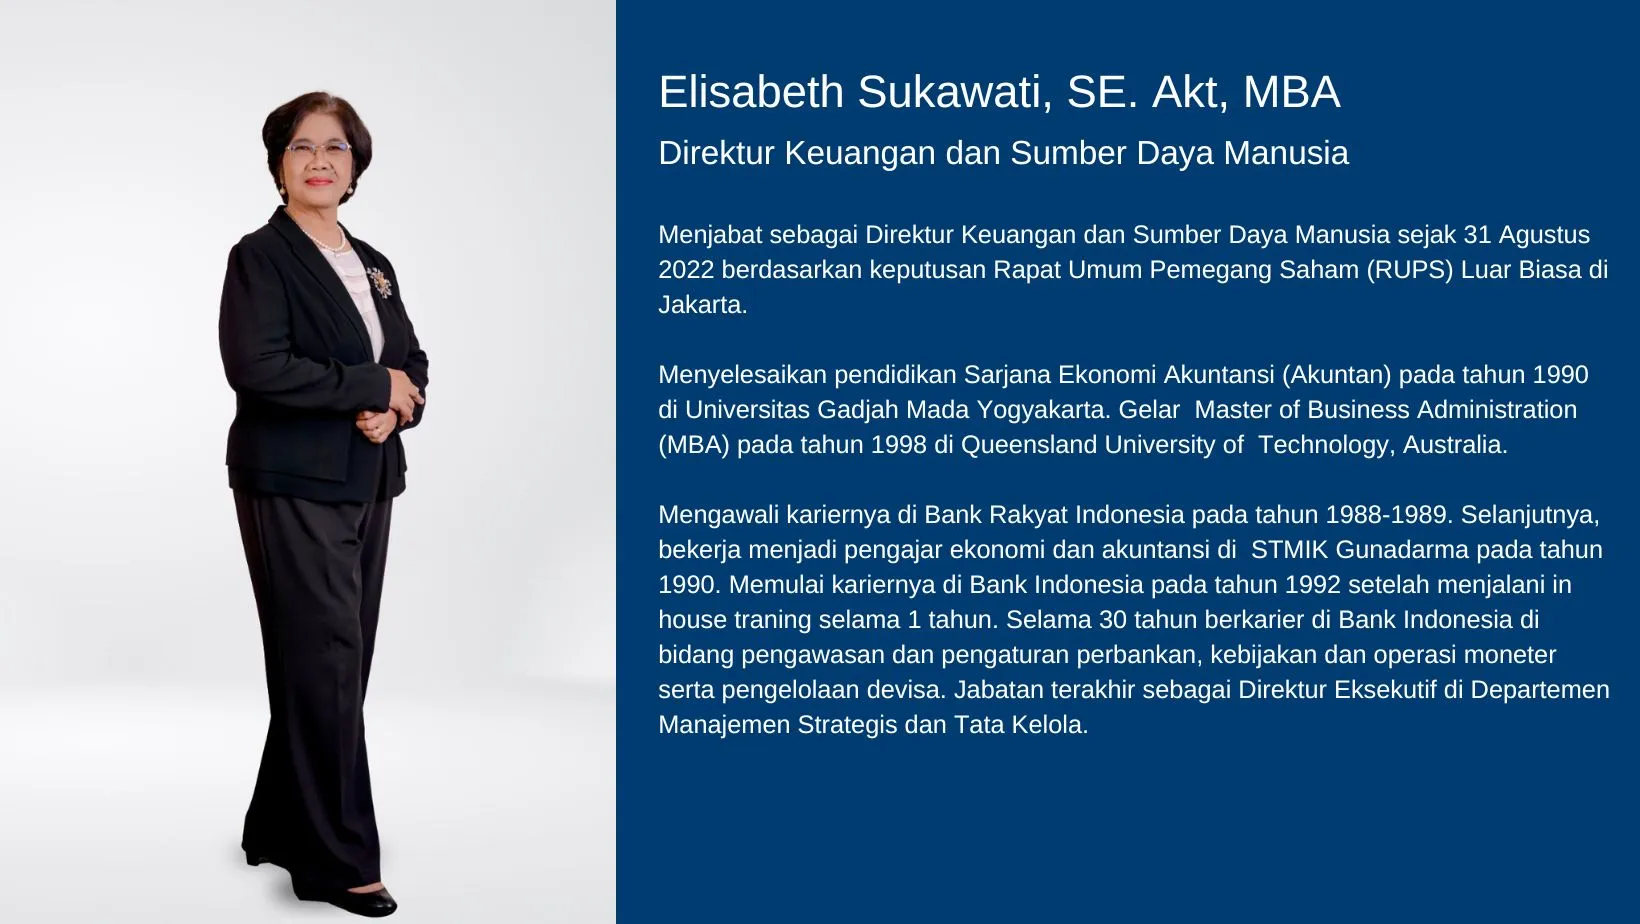 Elisabeth Sukawati, SE. Akt, MBA